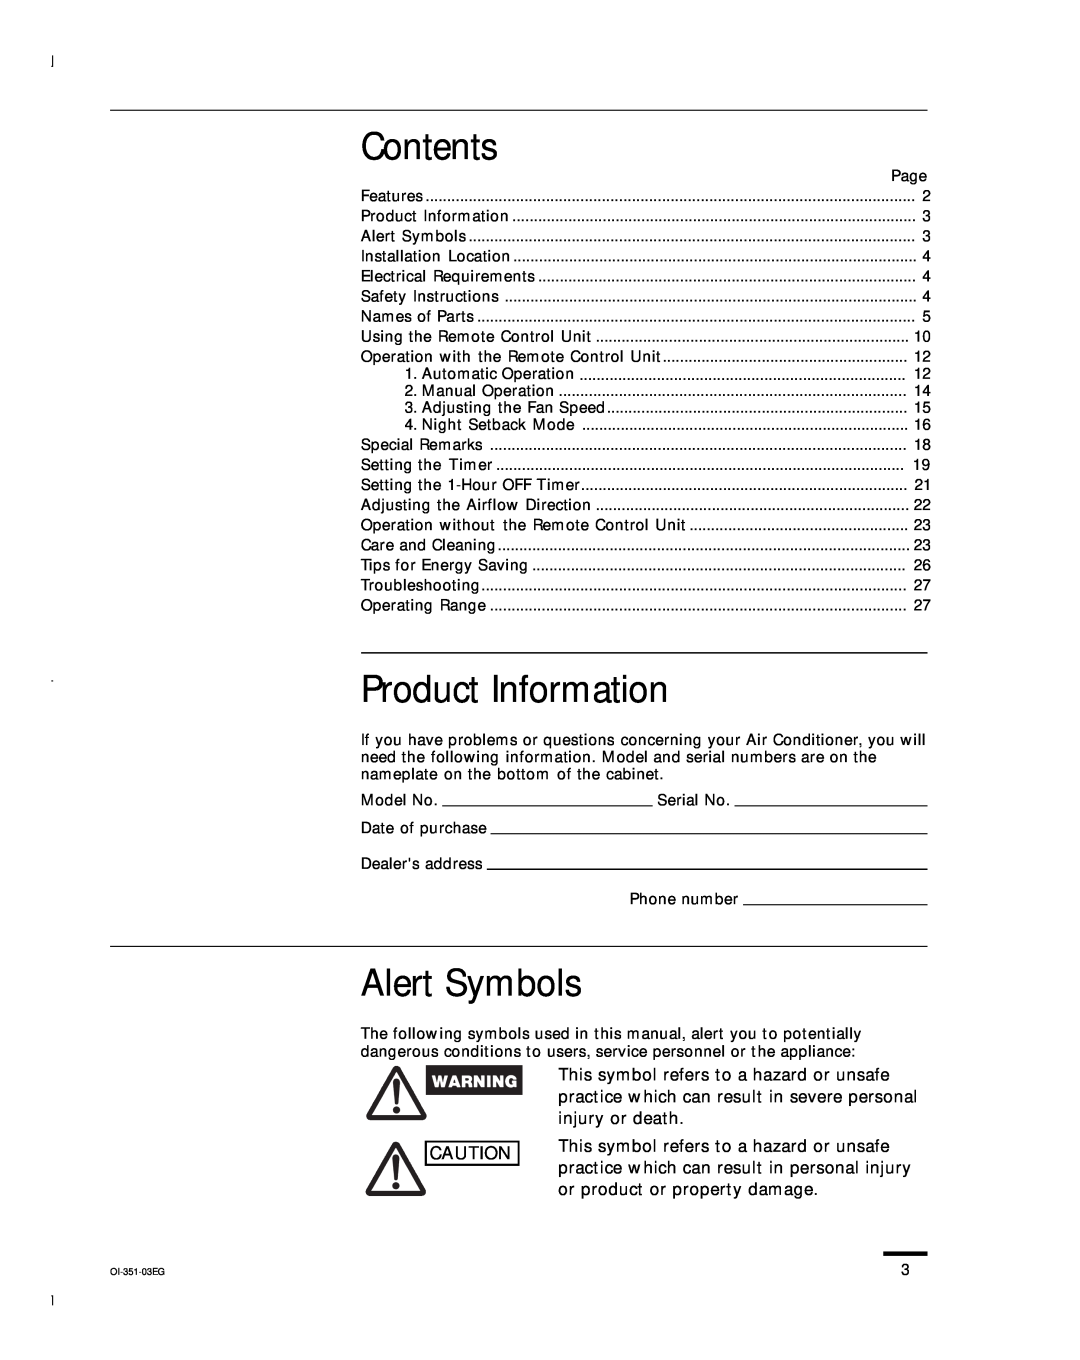 Sanyo KHS1852, KHS0951, KHS1251 instruction manual Contents, Product Information, Alert Symbols 